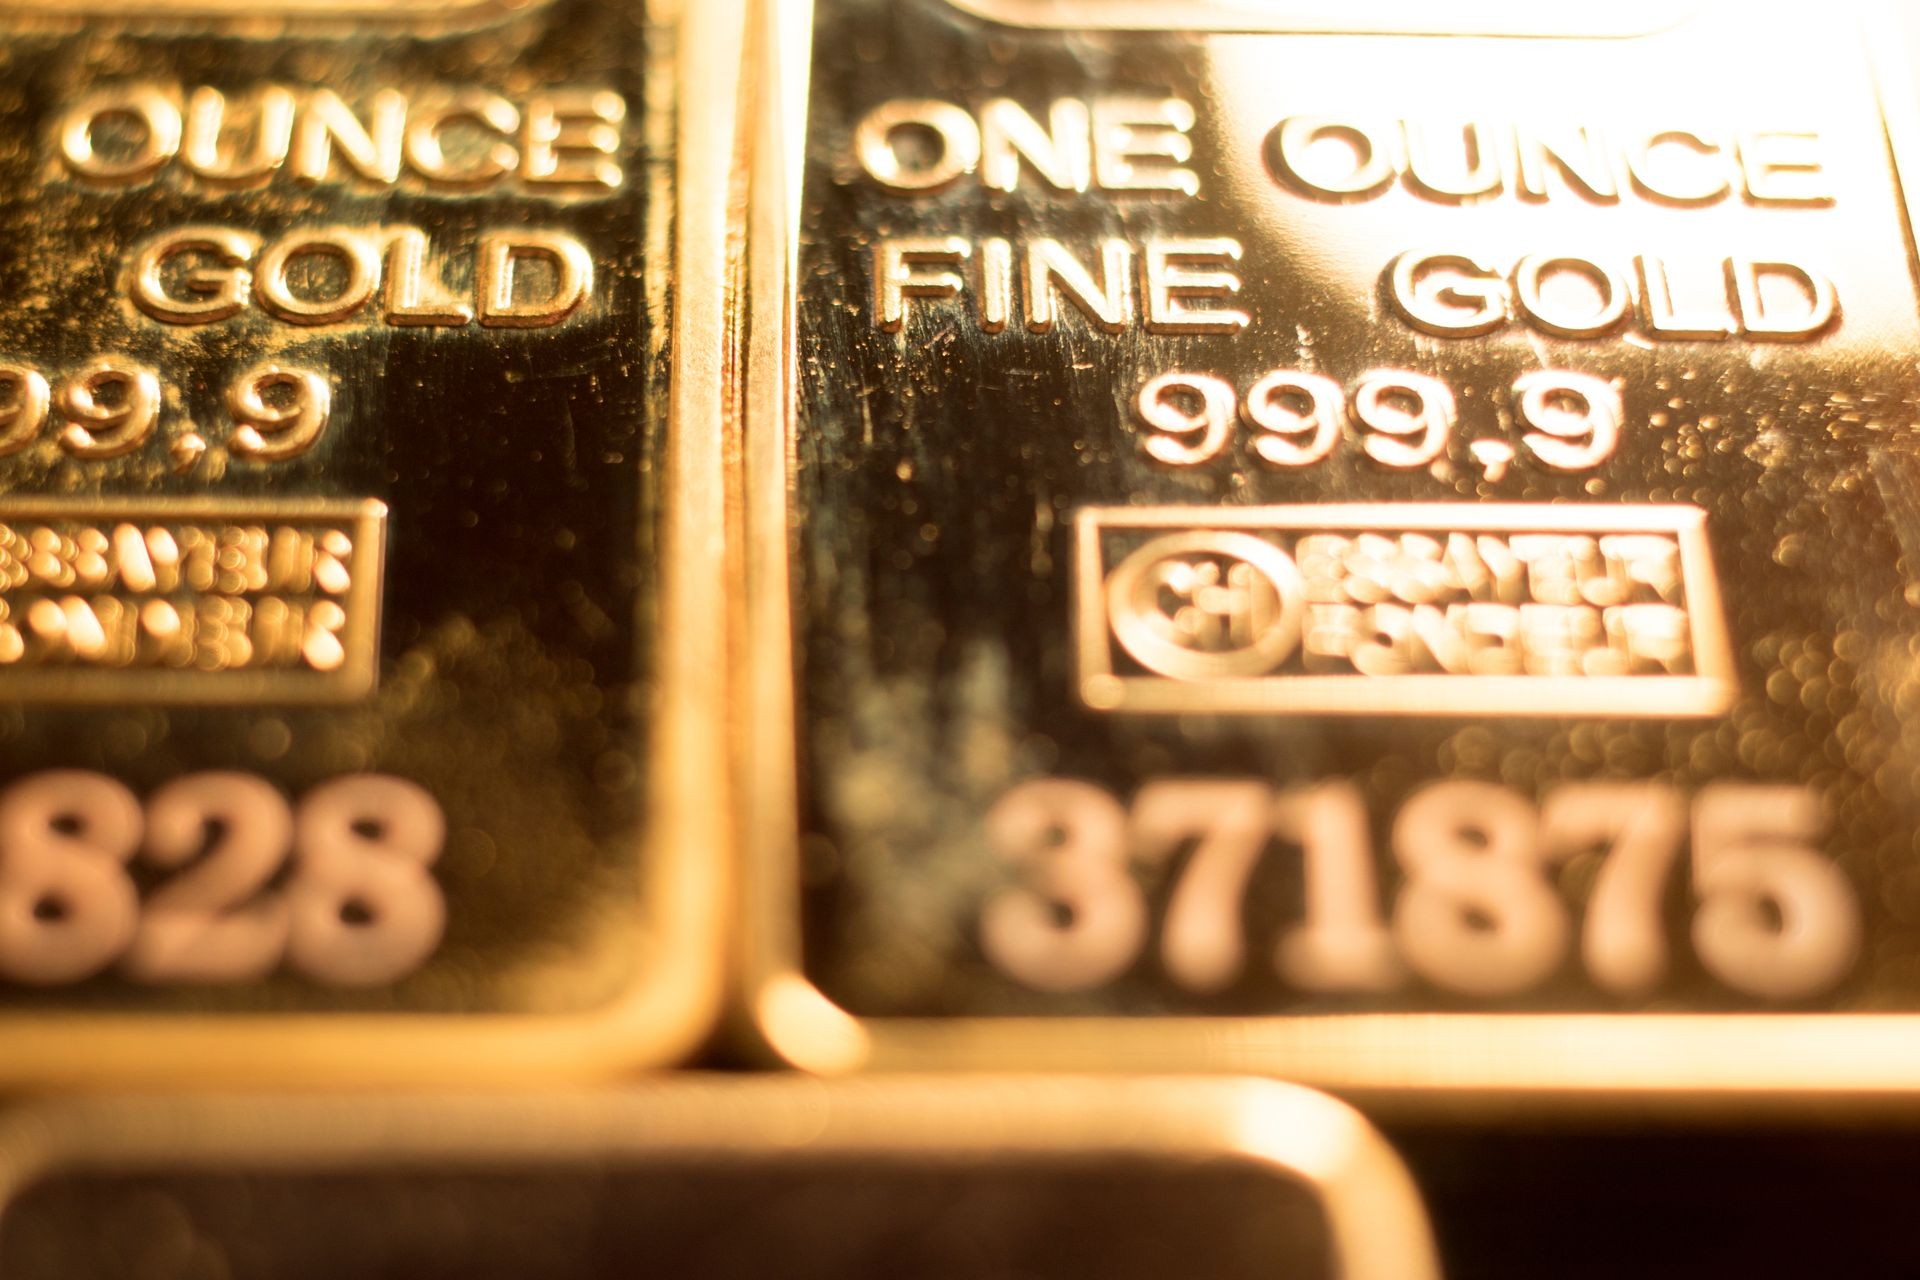 Fine solid gold 999.9 one ounce bullion ingot precious metals bar closeup isolated photo.